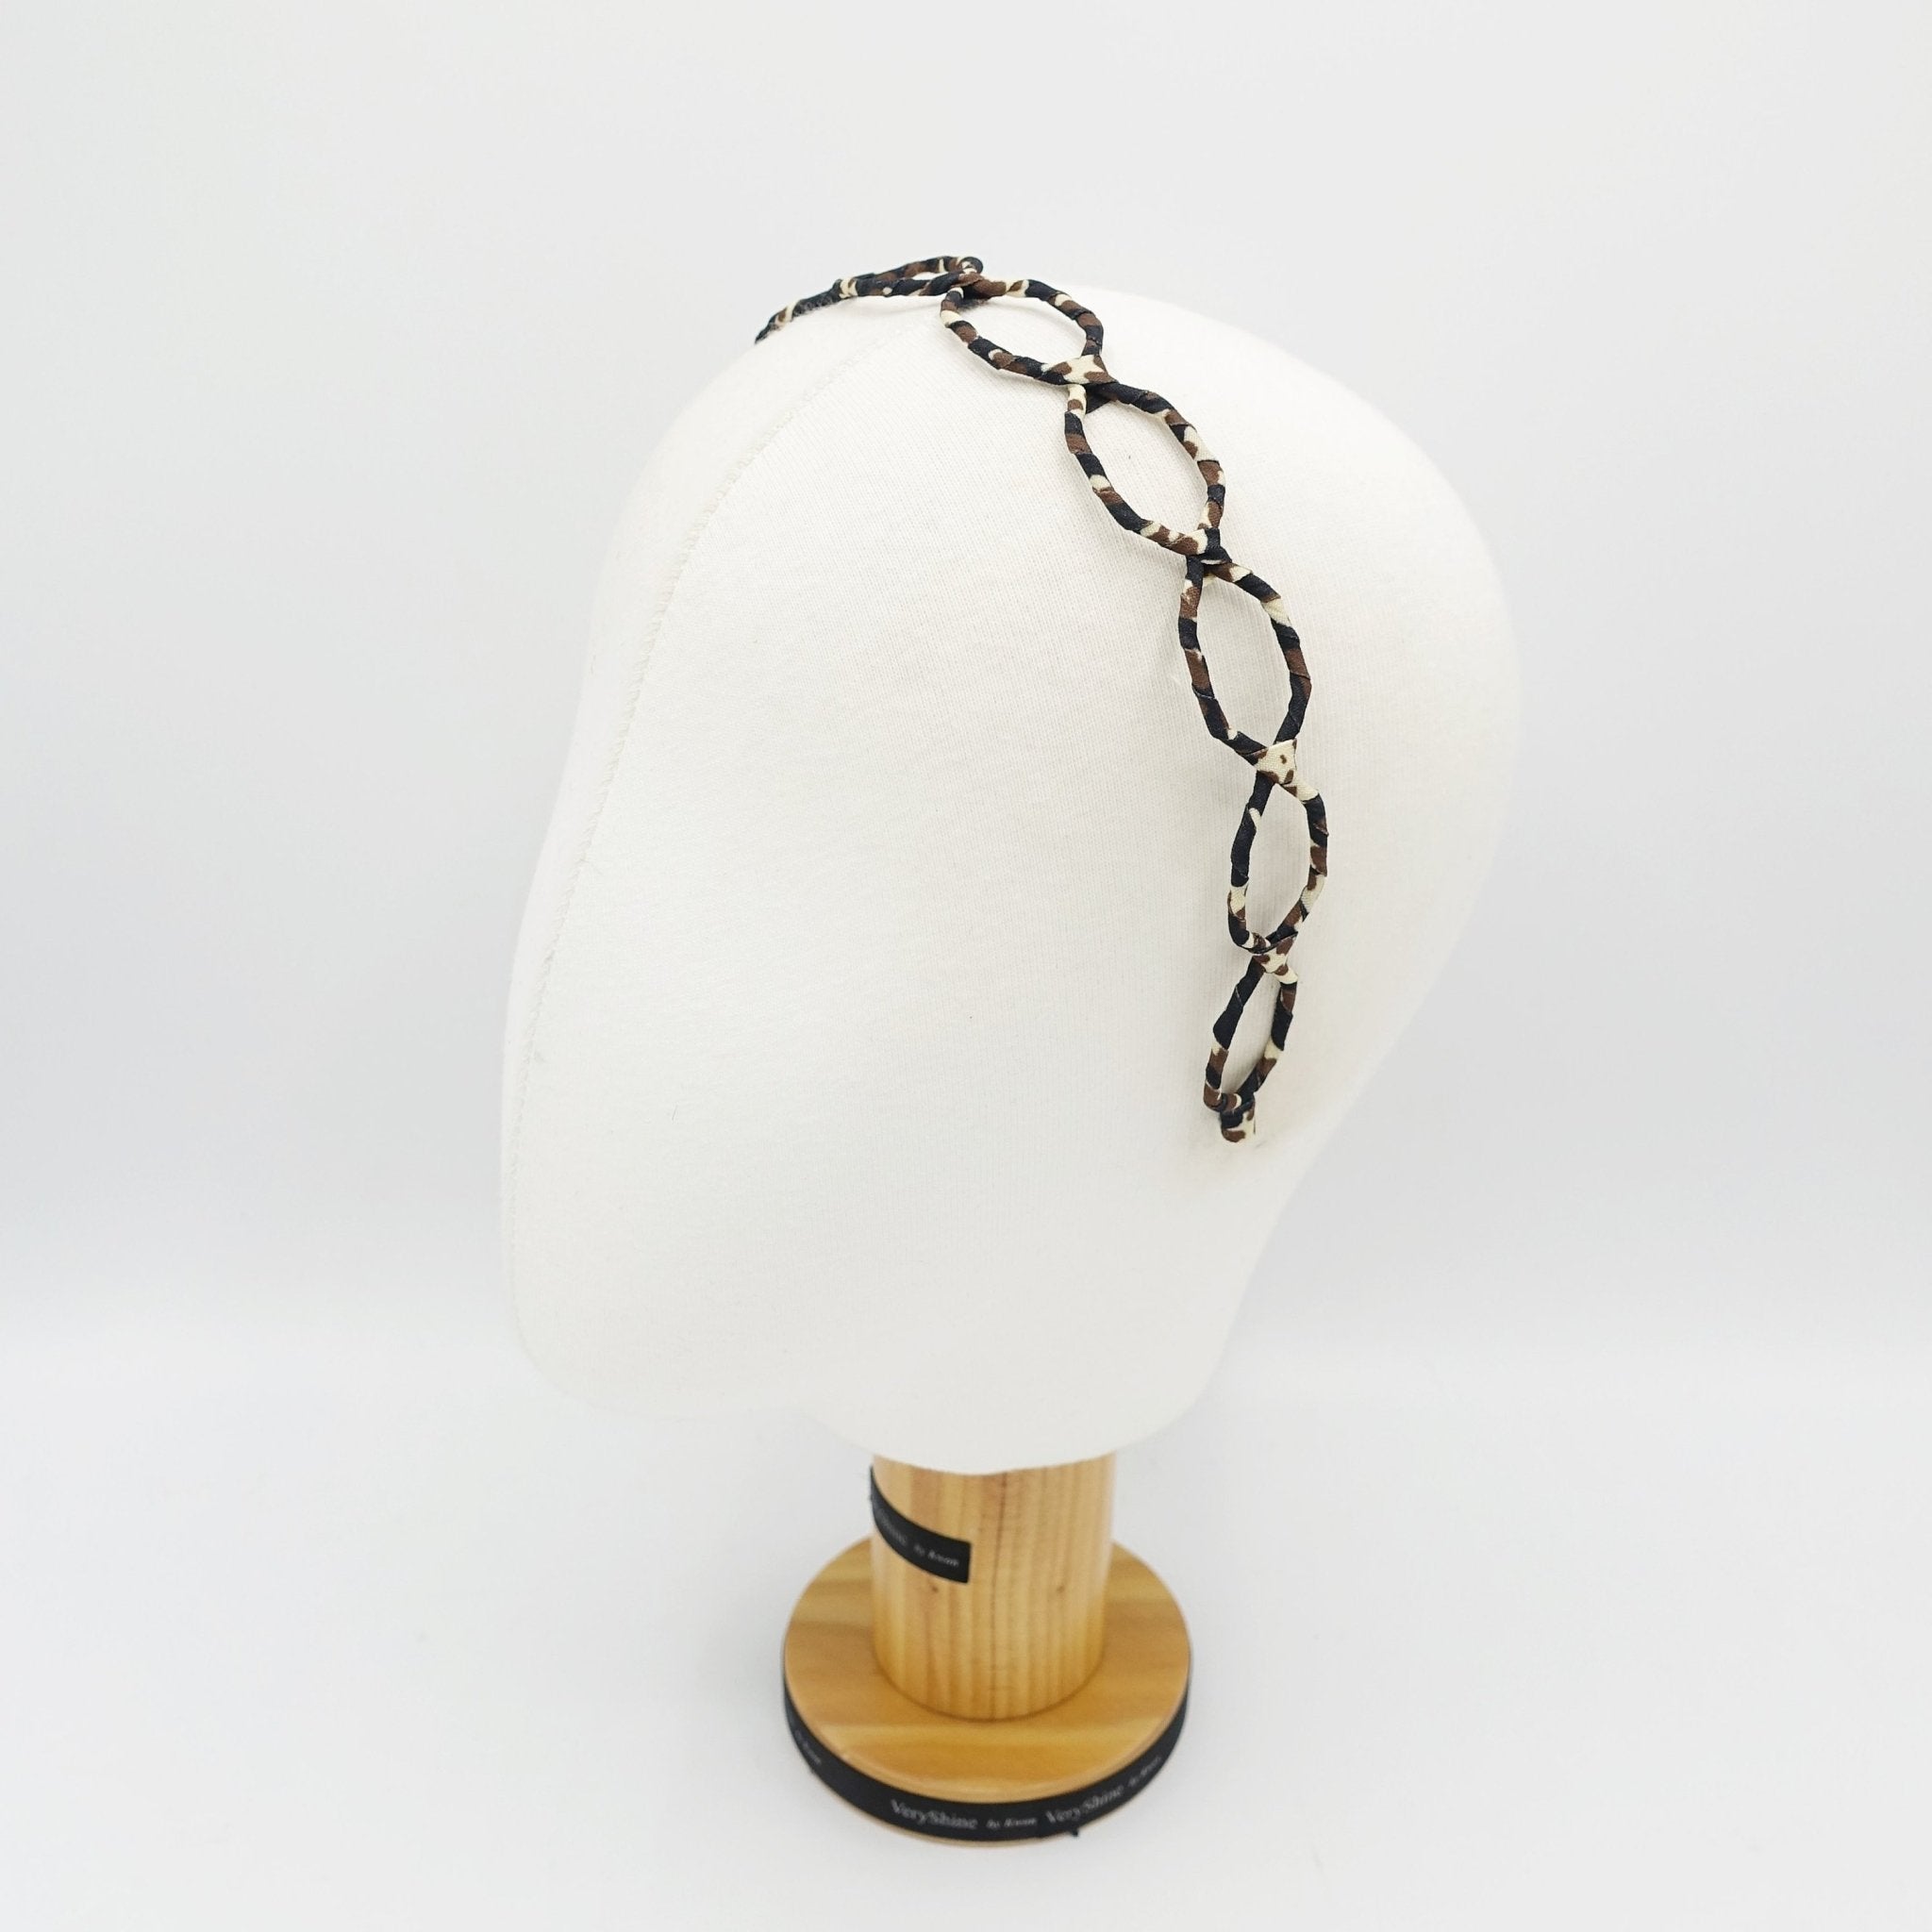 VeryShine military print wrap honey comb headband light thin hairband hair accessory for women